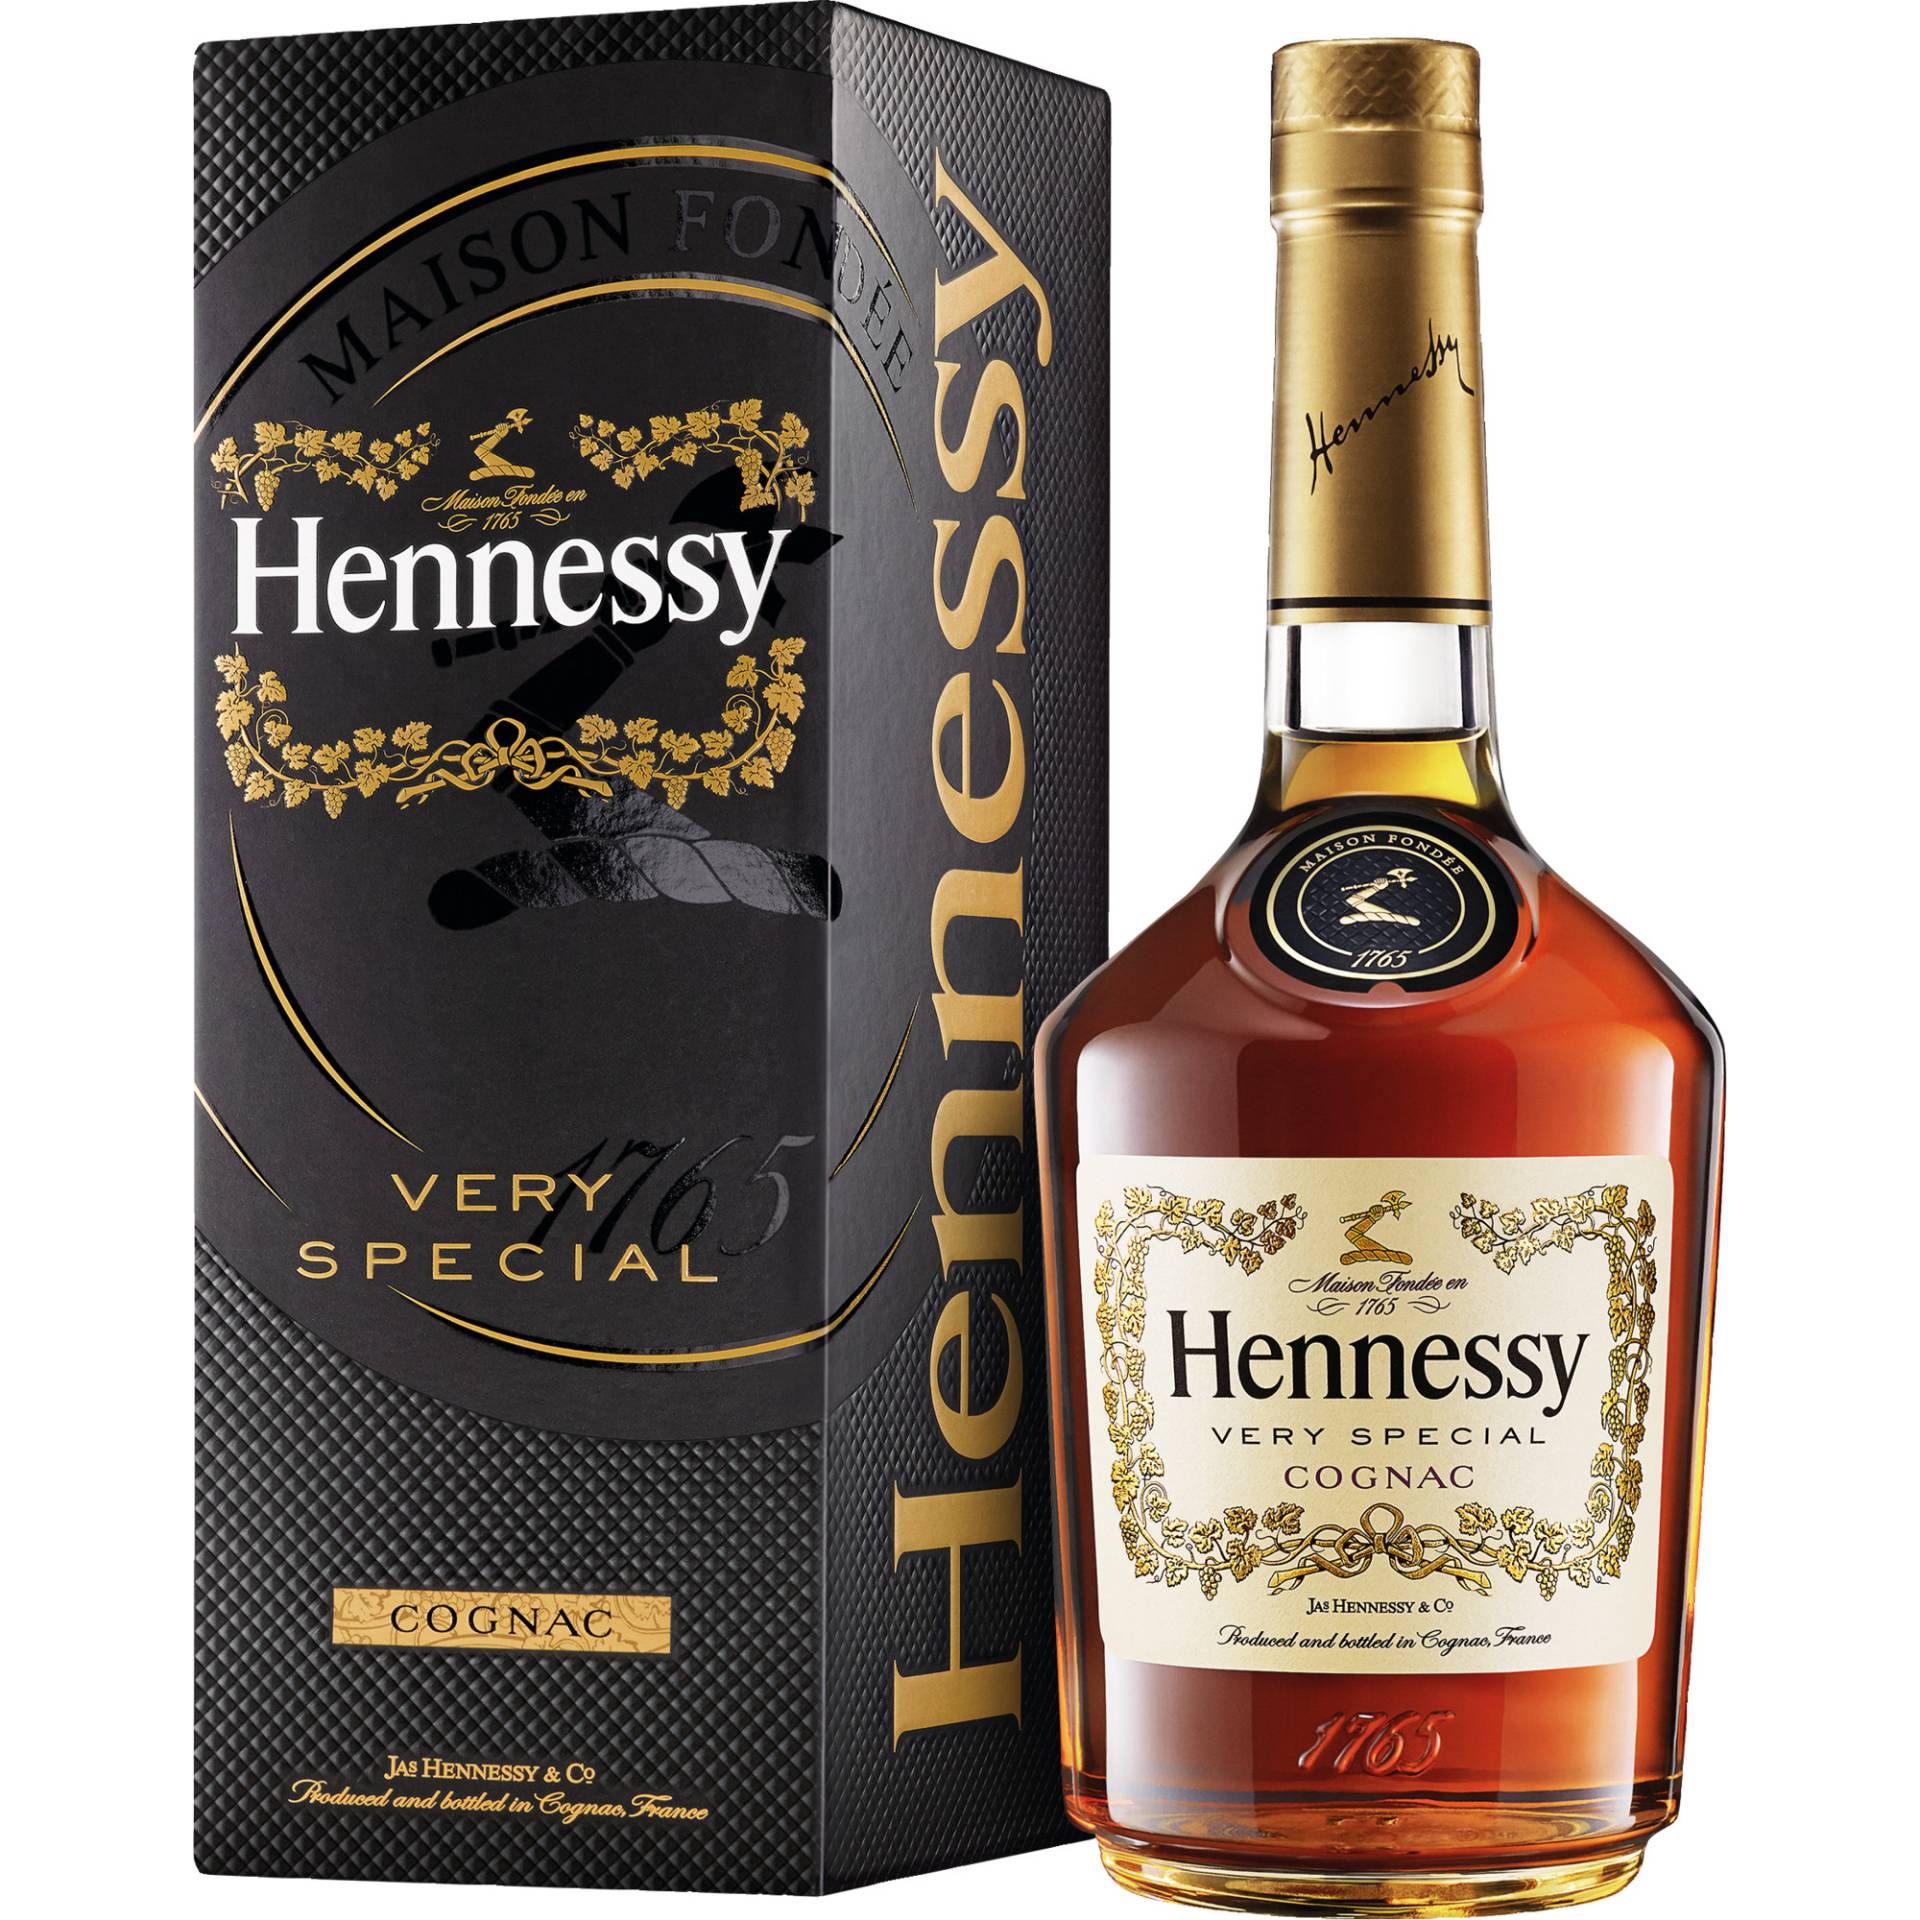 Cognac Hennessy VS, Cognac AOP, 0,7L, 40% Vol., Geschenketui, Cognac, Spirituosen von Hennessy Cognac, Cognac, France